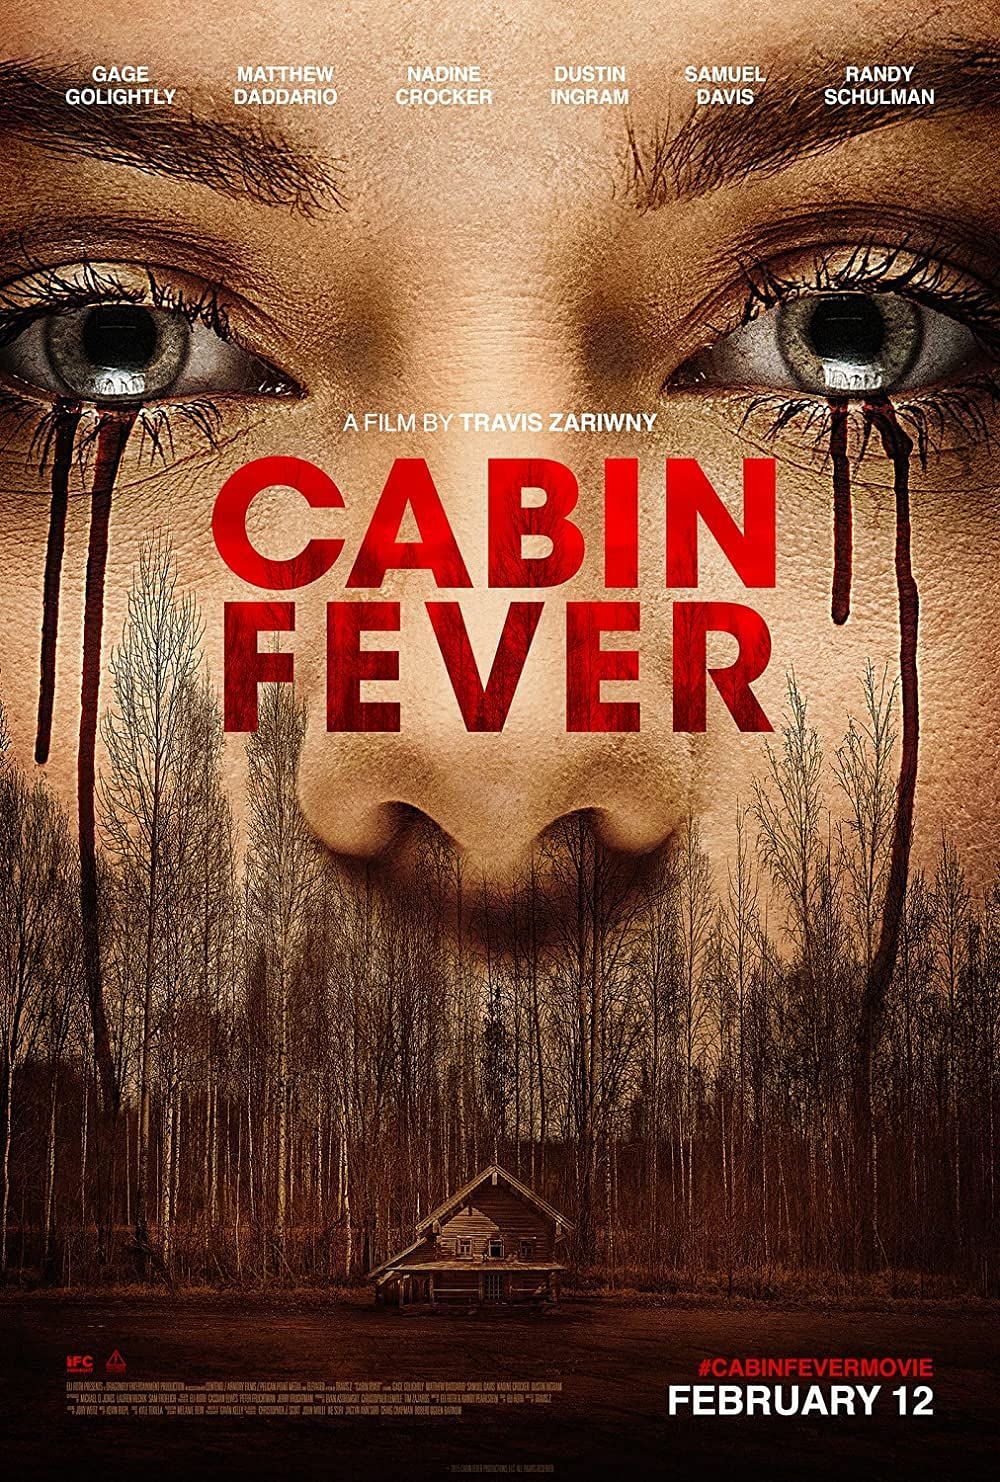 cabin fever image (image via imdb.com)